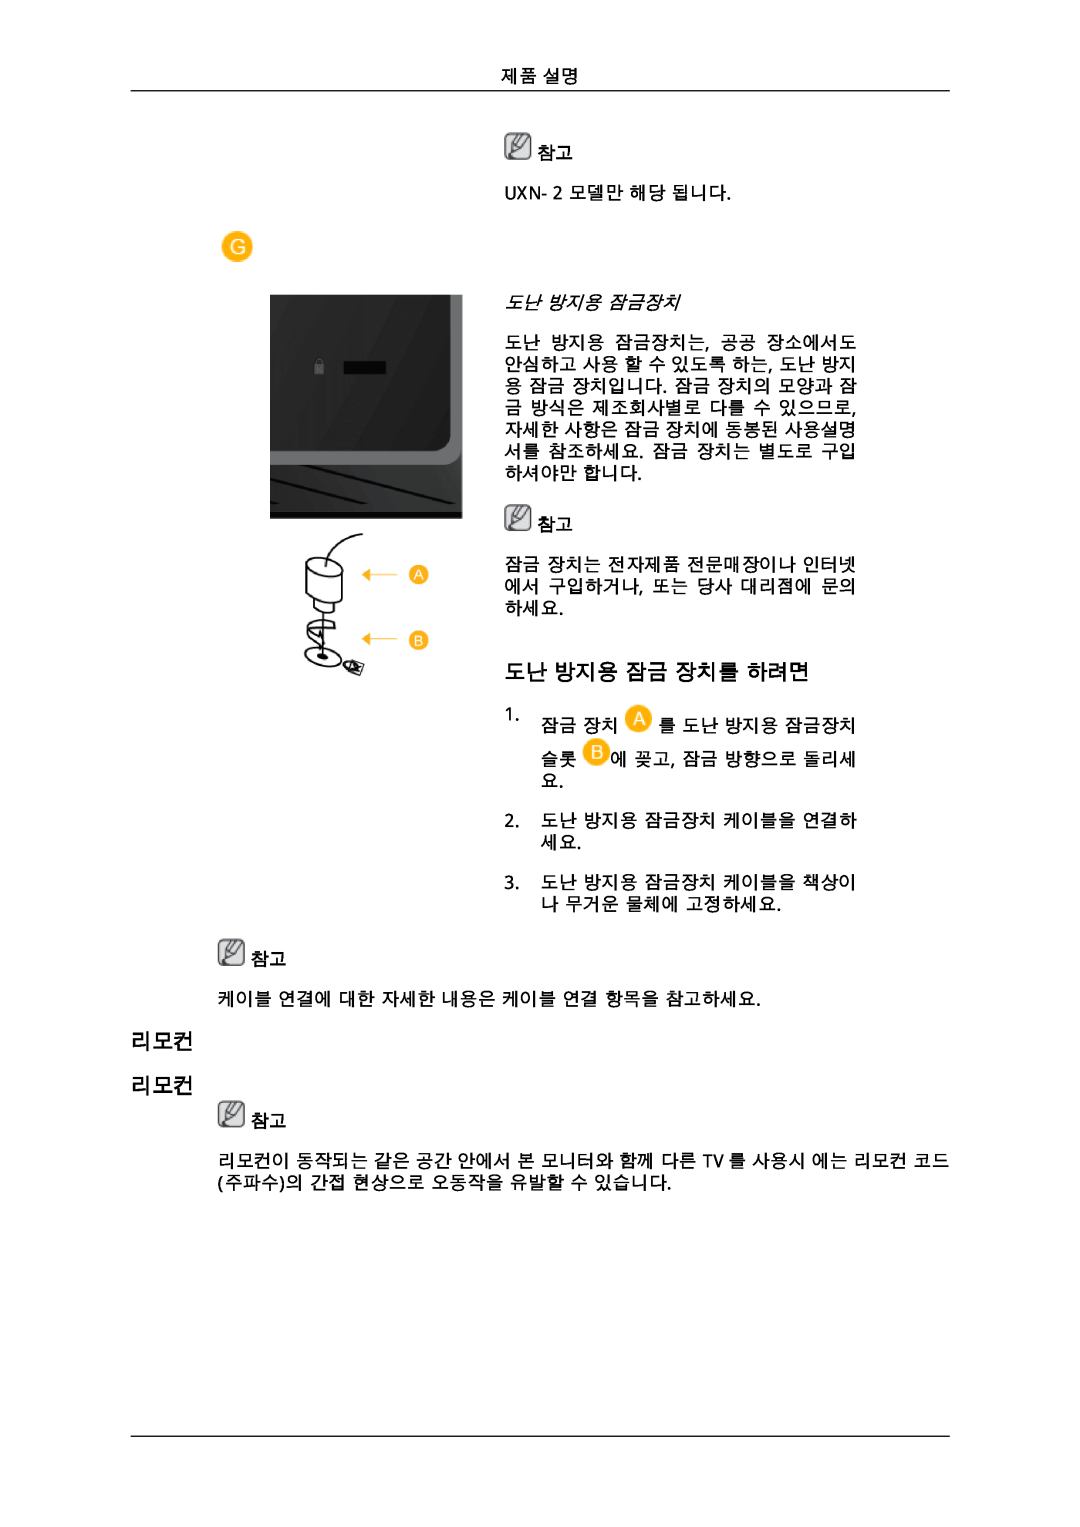 Samsung 725D quick start 도난 방지용 잠금 장치를 하려면, 리모컨 리모컨, 도난 방지용 잠금장치 